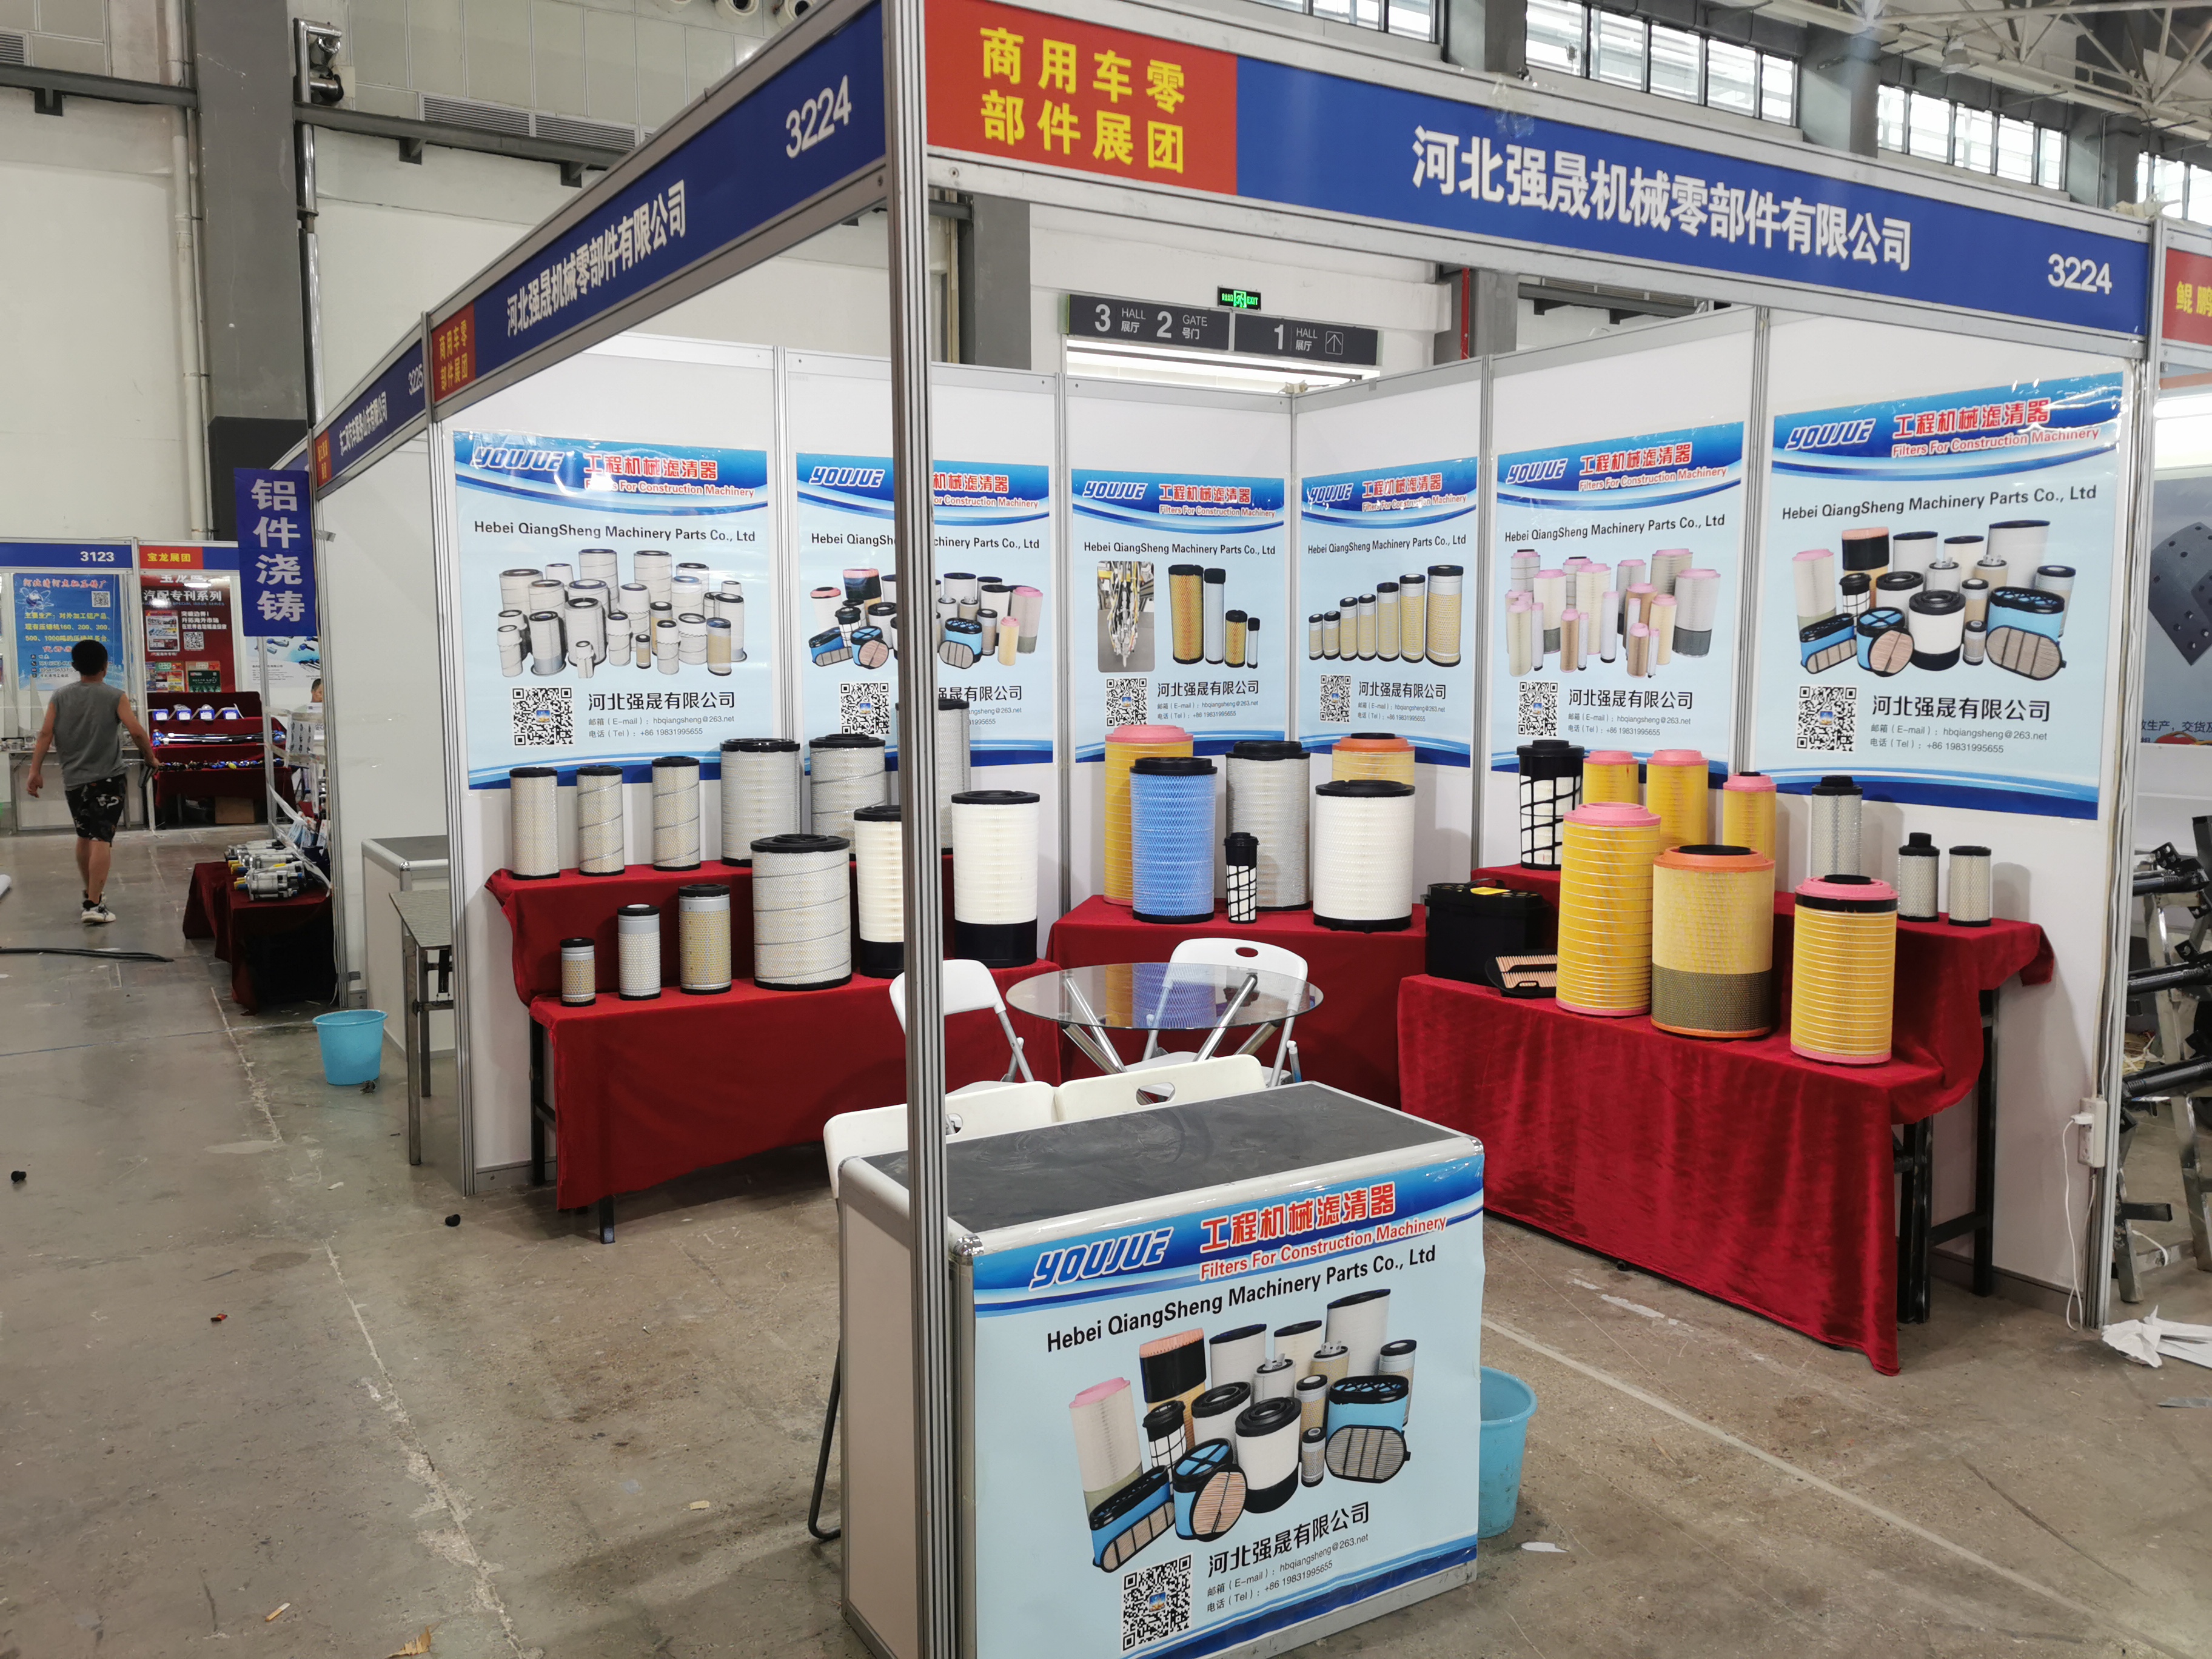 AUTO PARTS CHINA：The 92th China Automobile Parts Fair